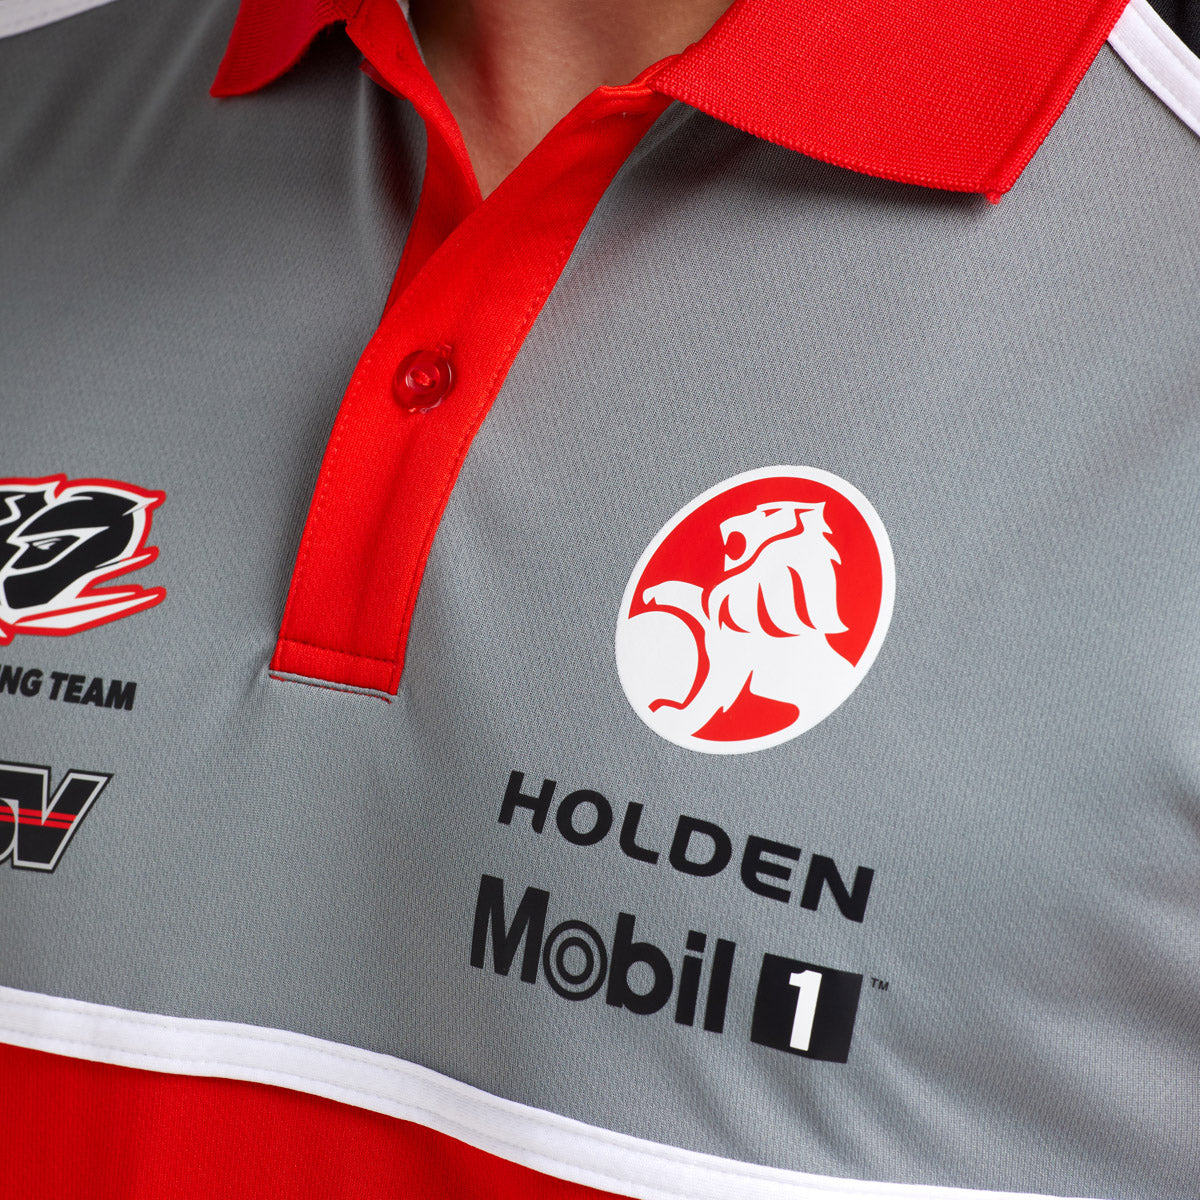 Holden Racing Team Retro Polo Red